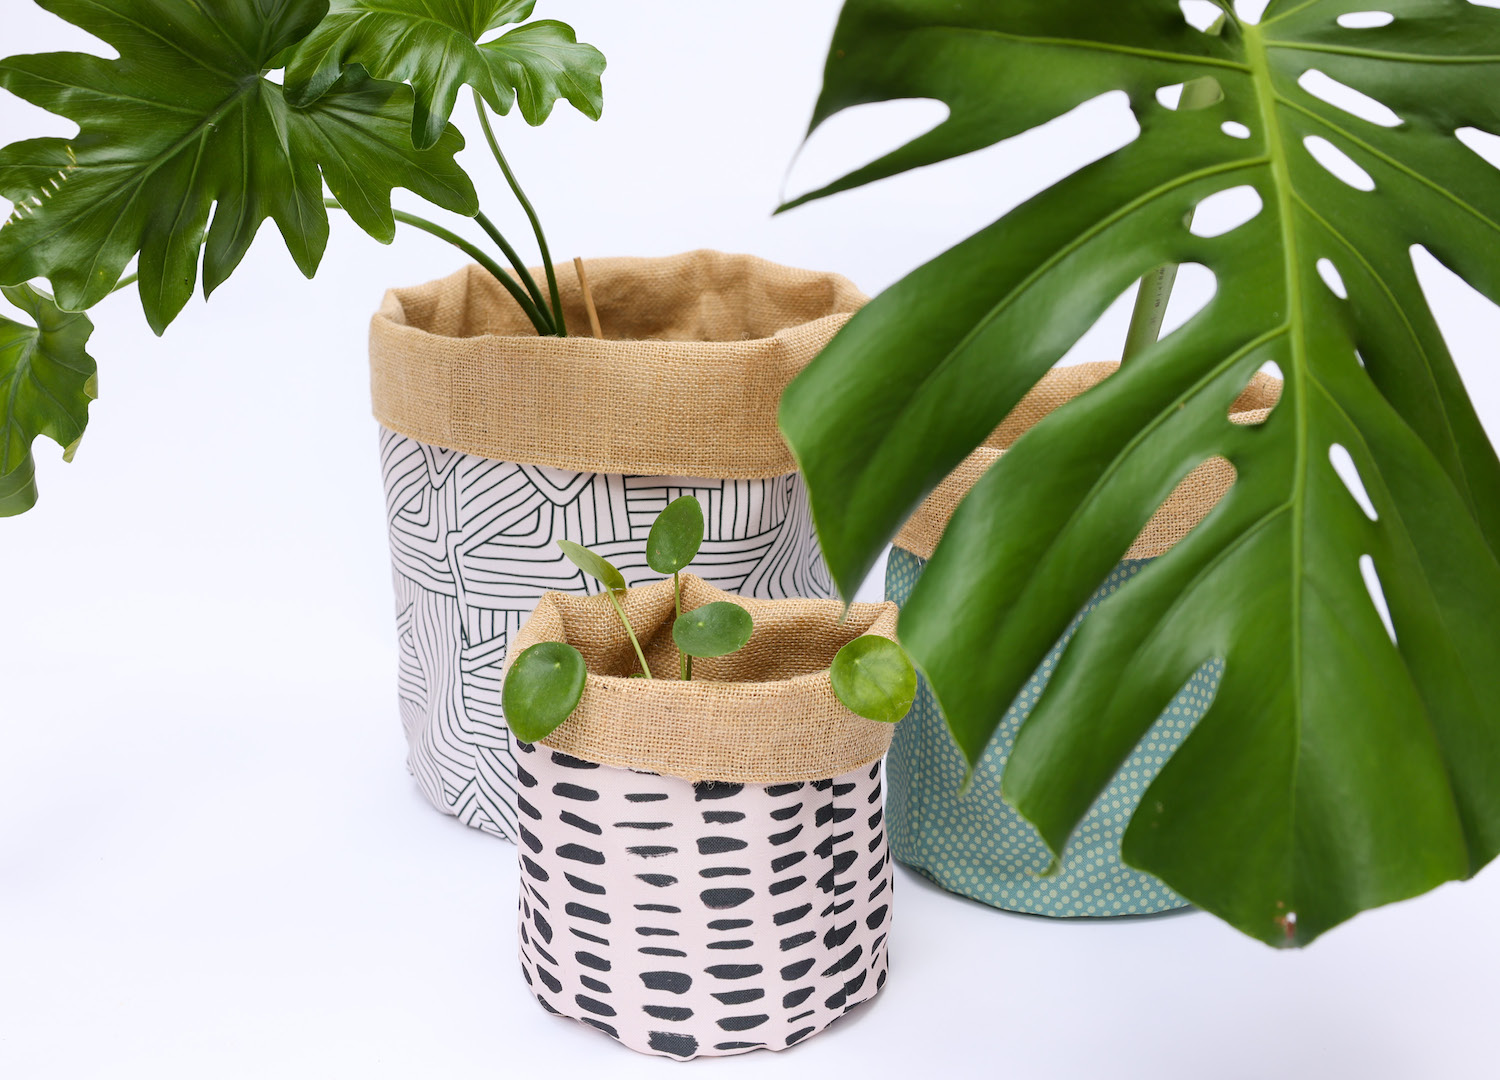 Small Smile Pencil Holder Succulent/flower Pot Planter for 